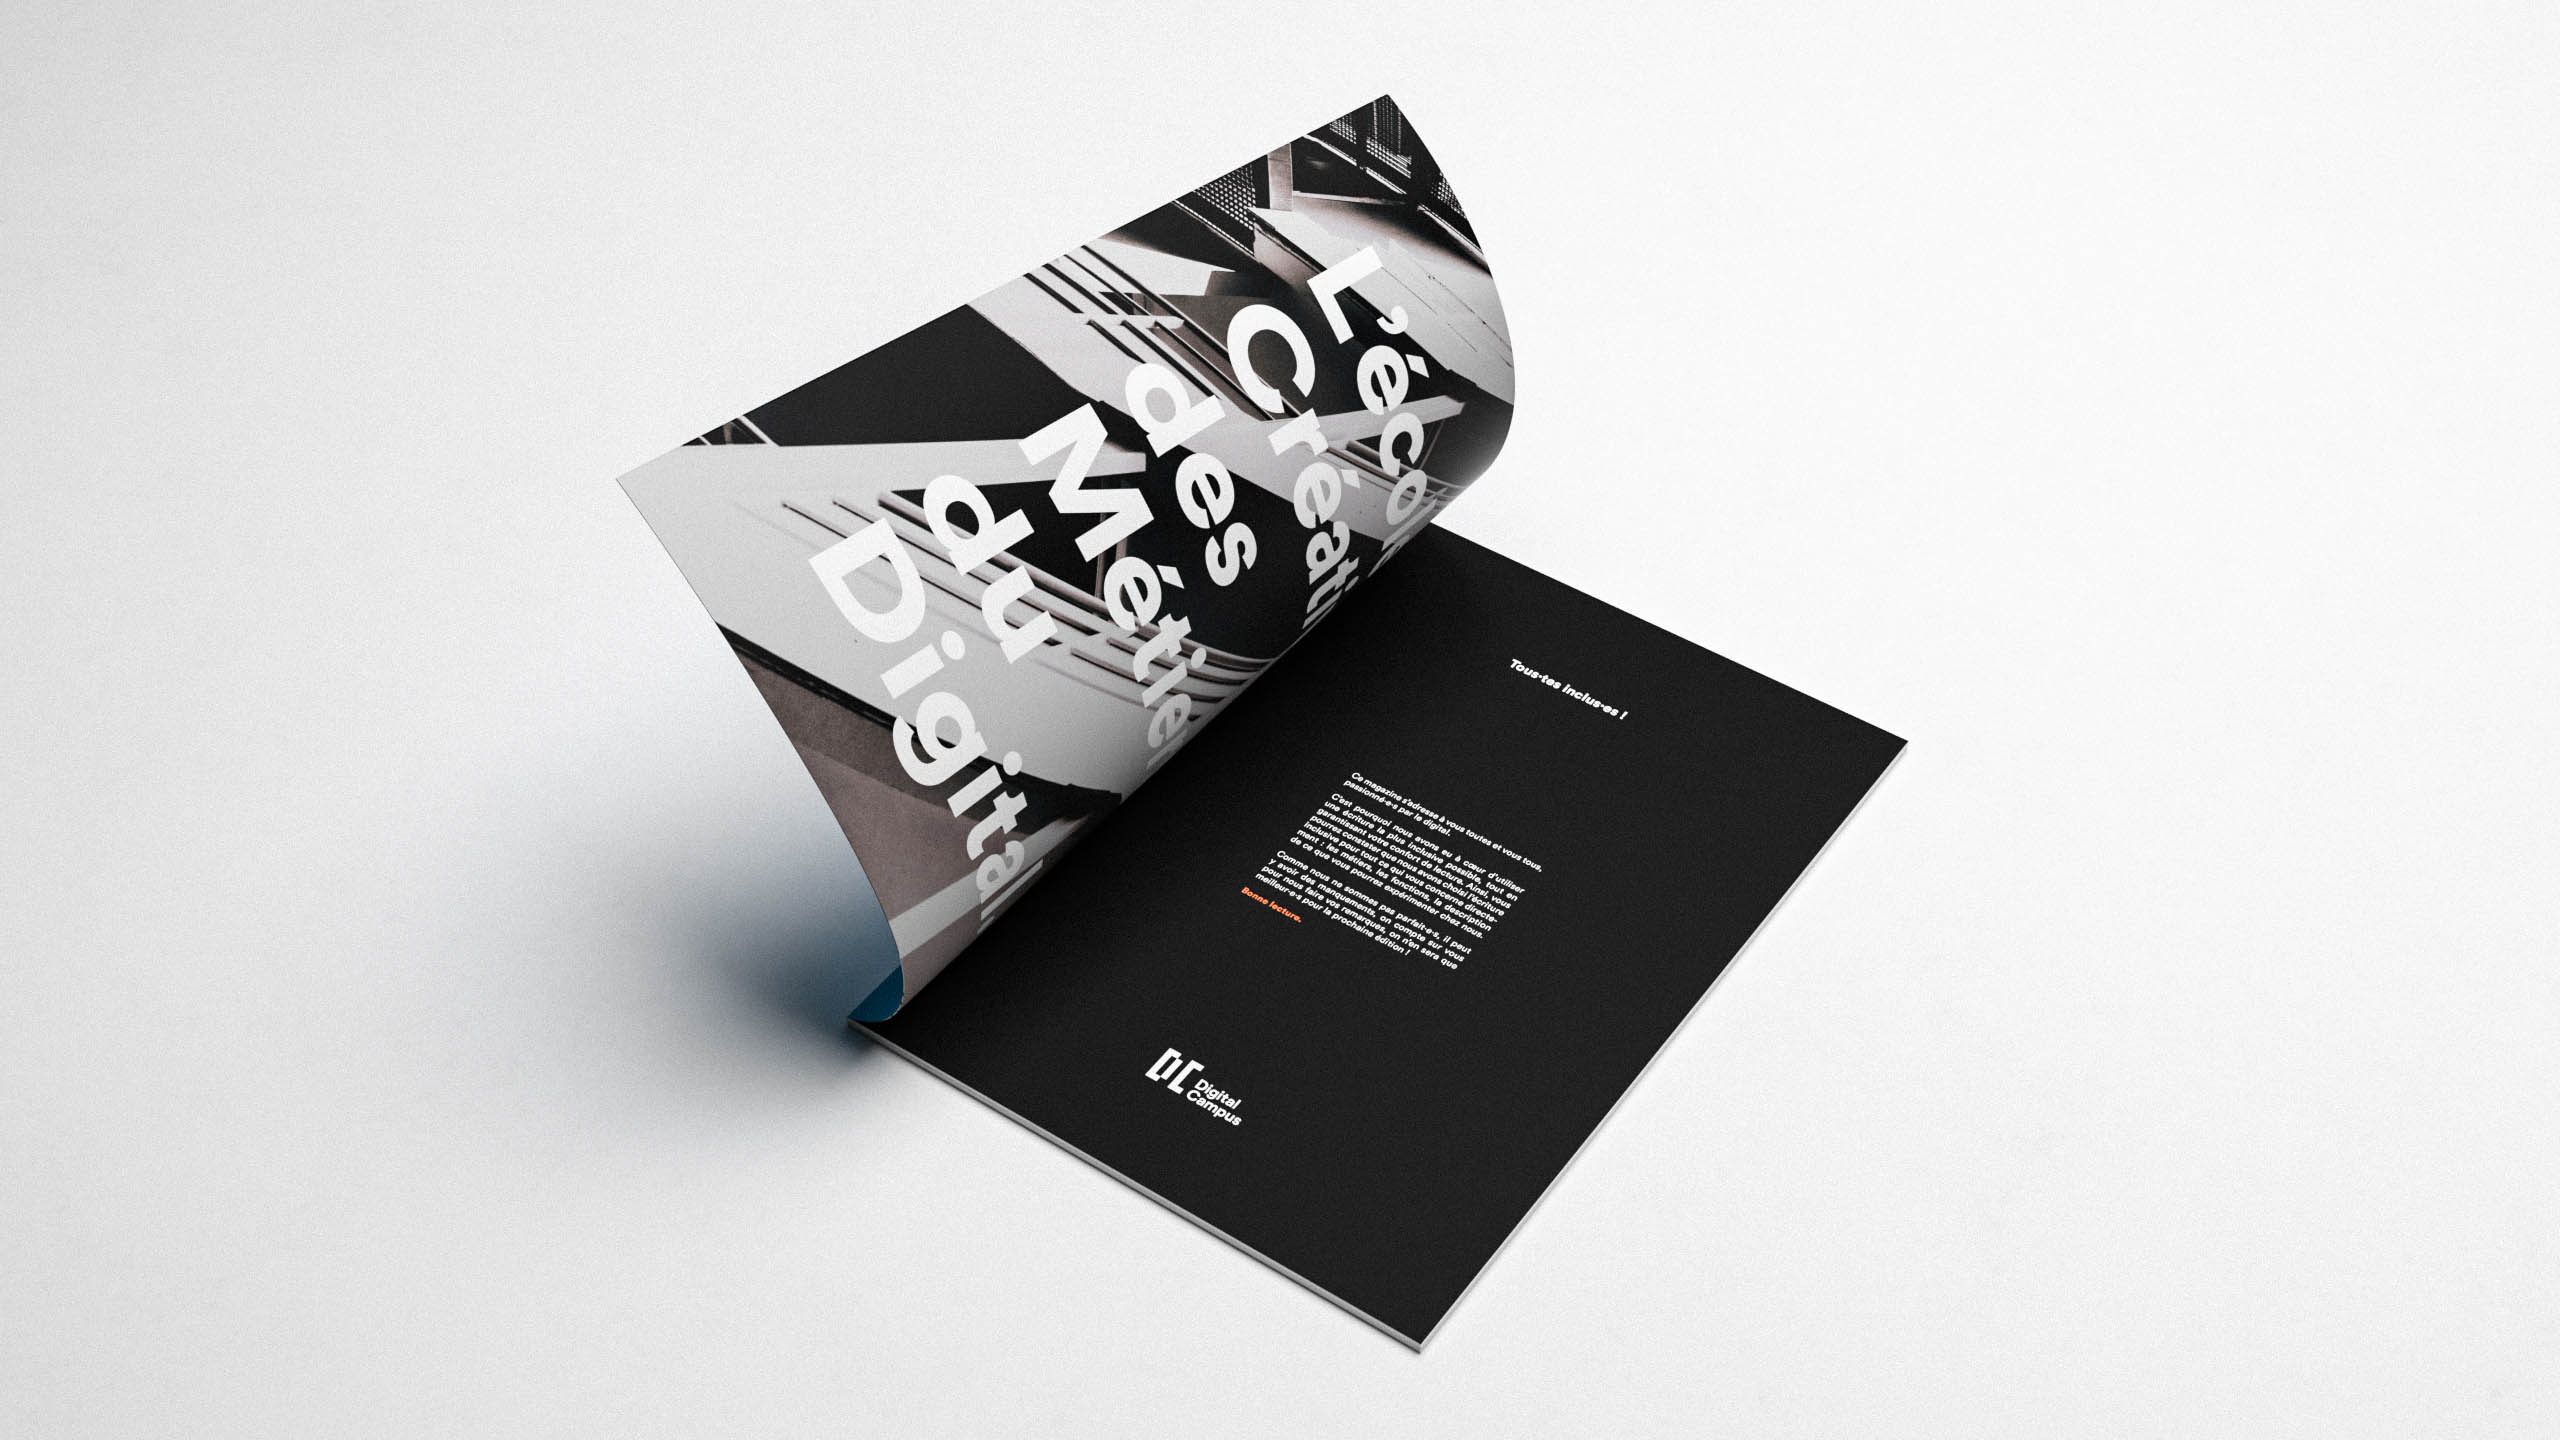 Antoine ghioni - Digital Campus - 2nd cover